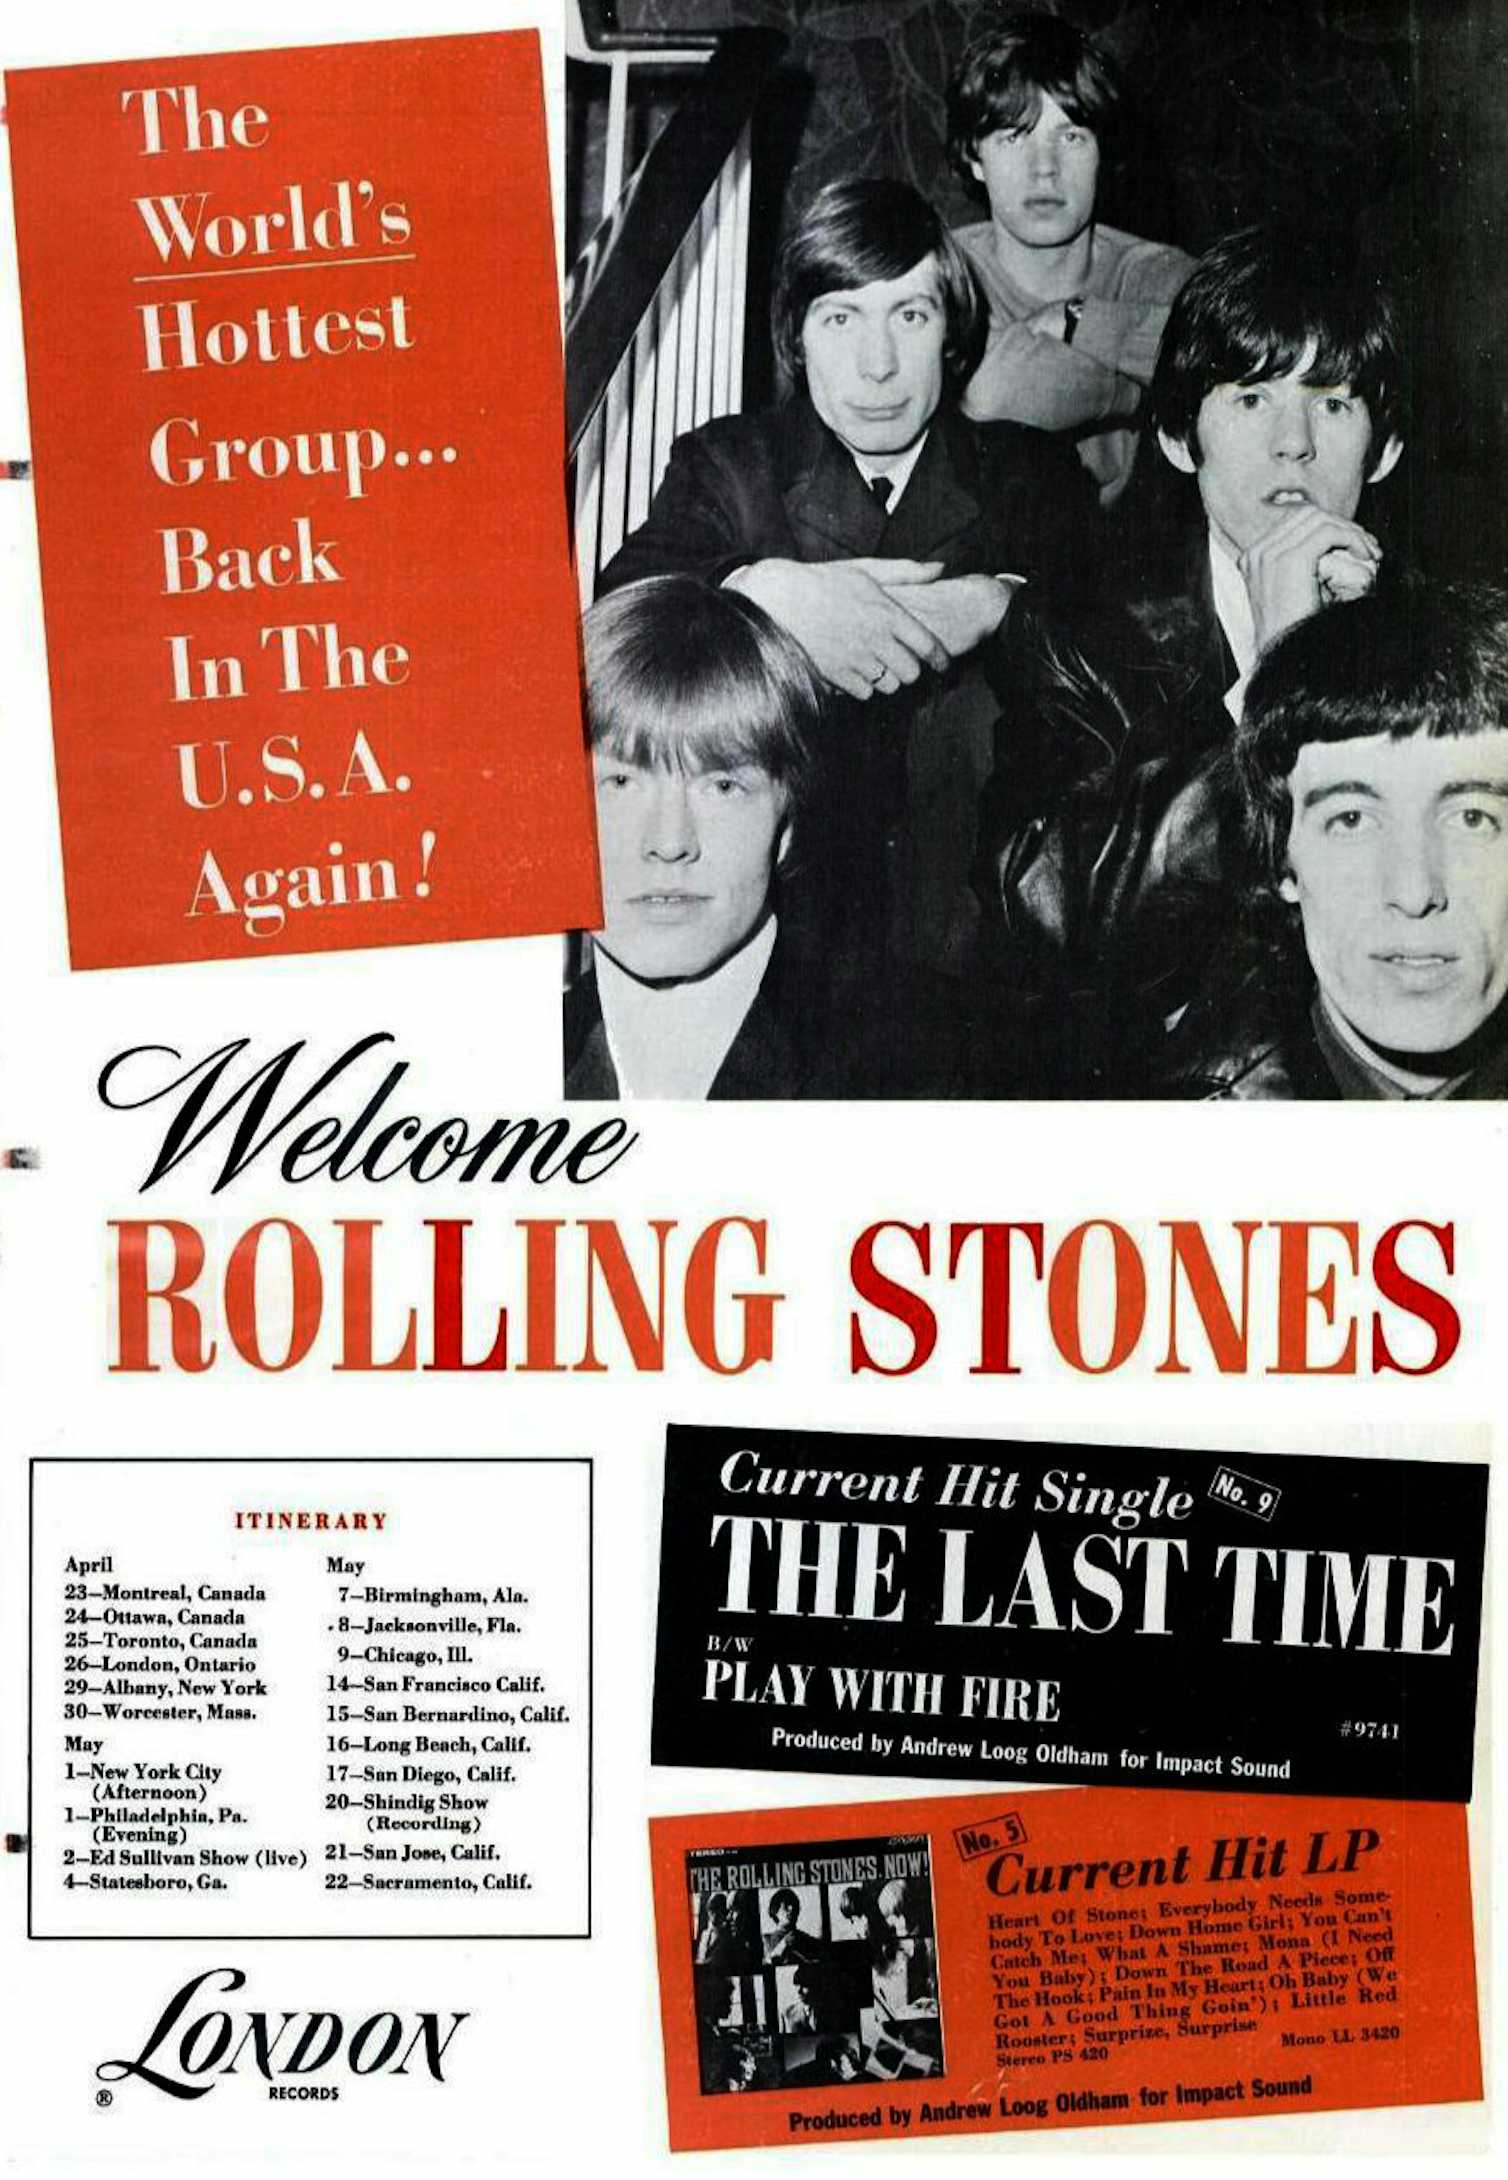 1965 rolling stones tour